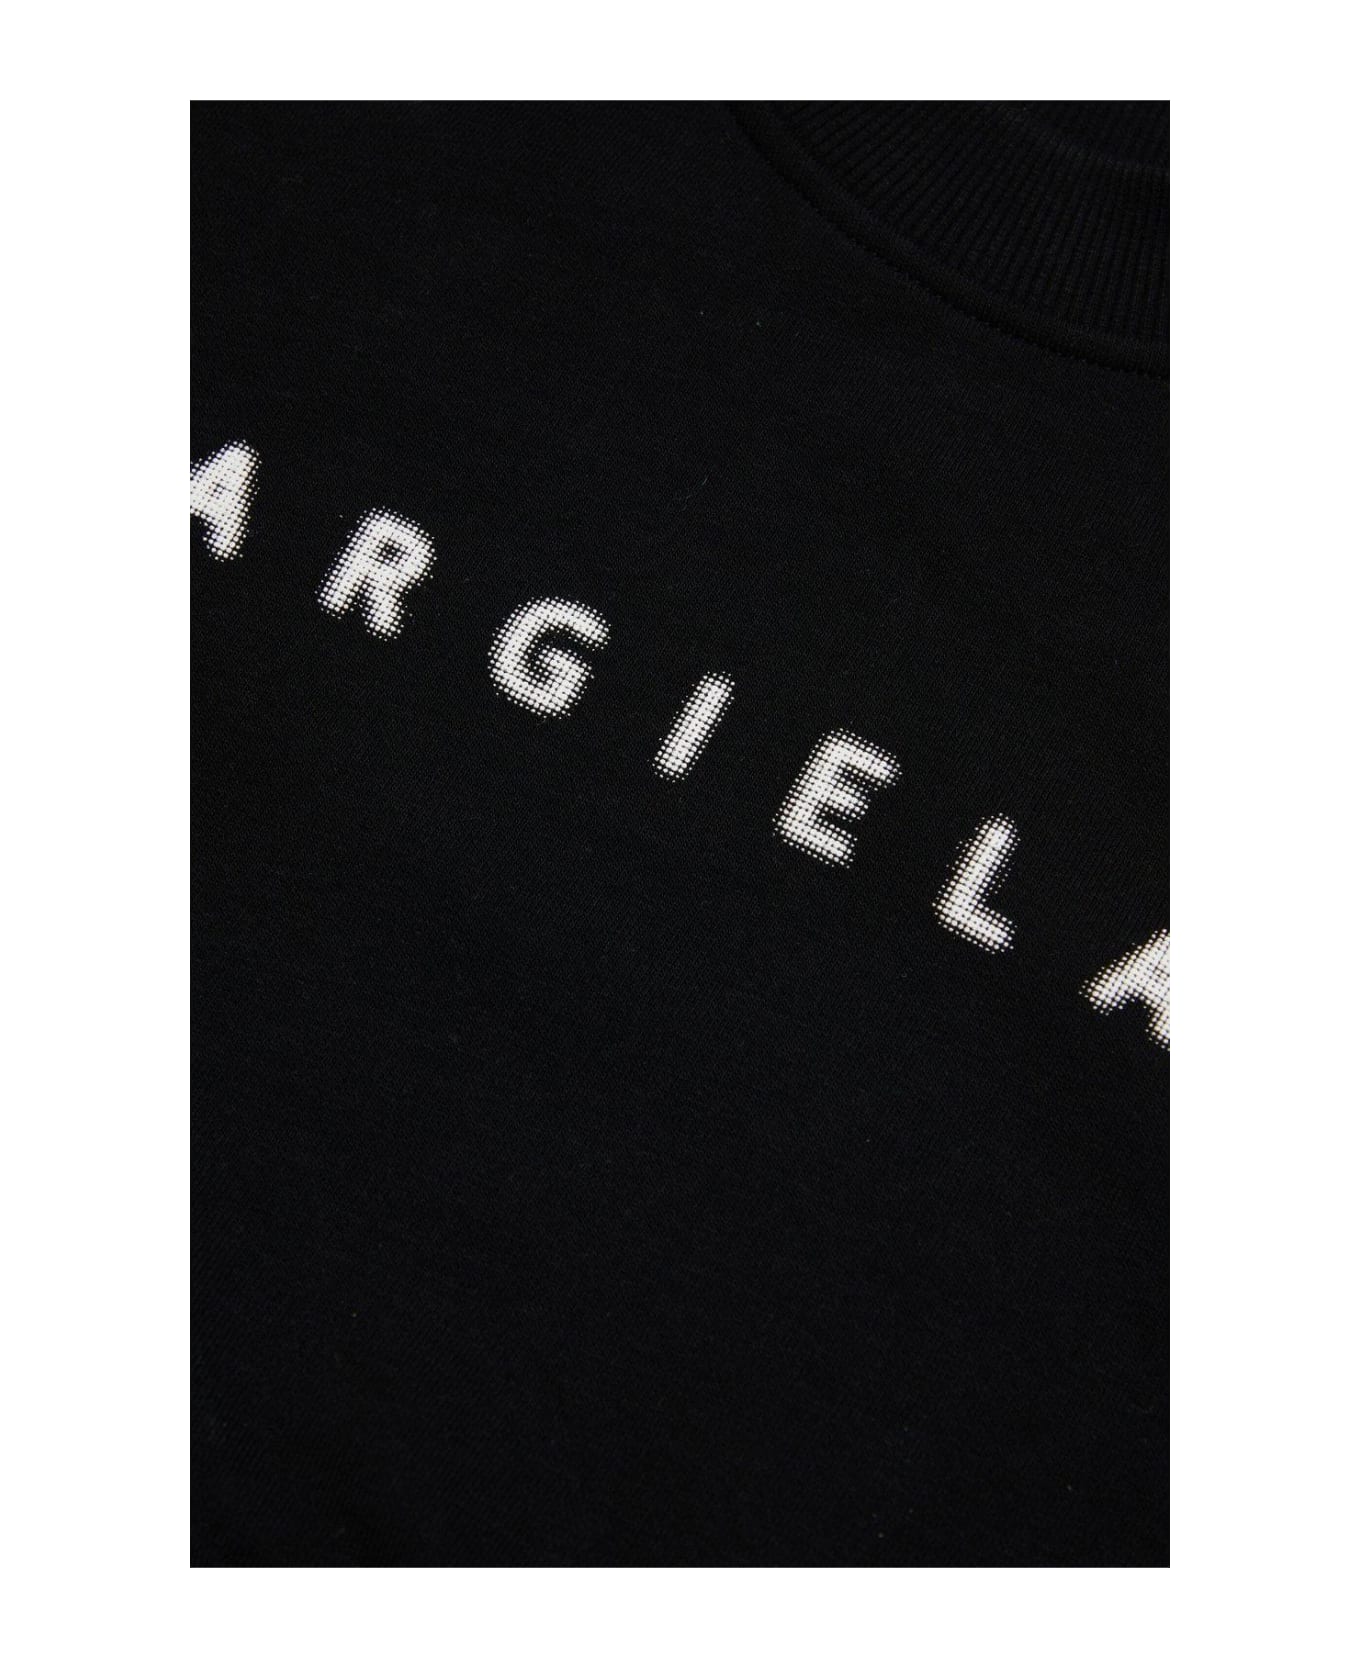 MM6 Maison Margiela Logo Printed Cropped Sweatshirt - Black